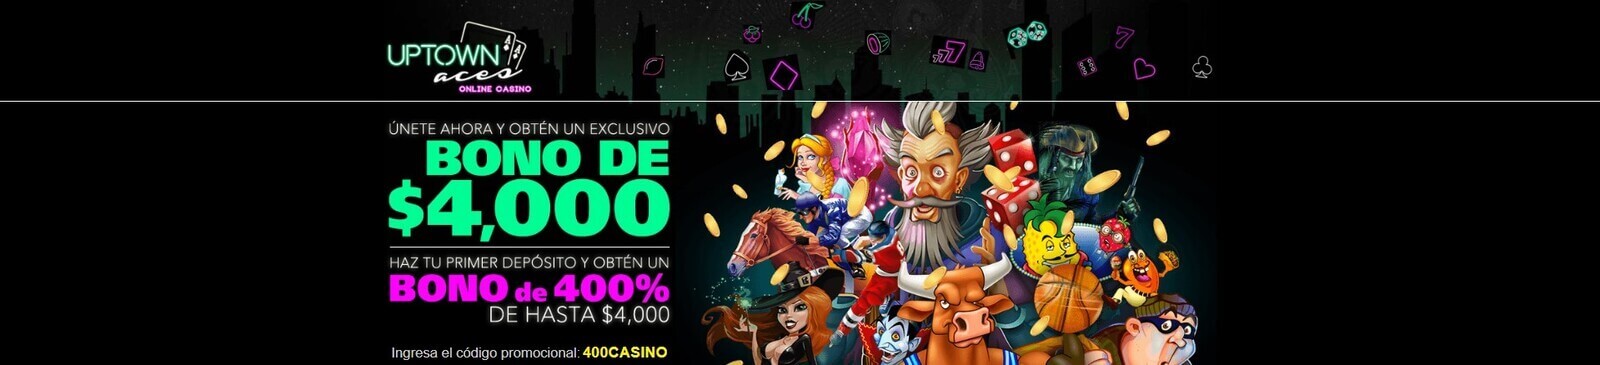 Página web de Uptown Aces Casino